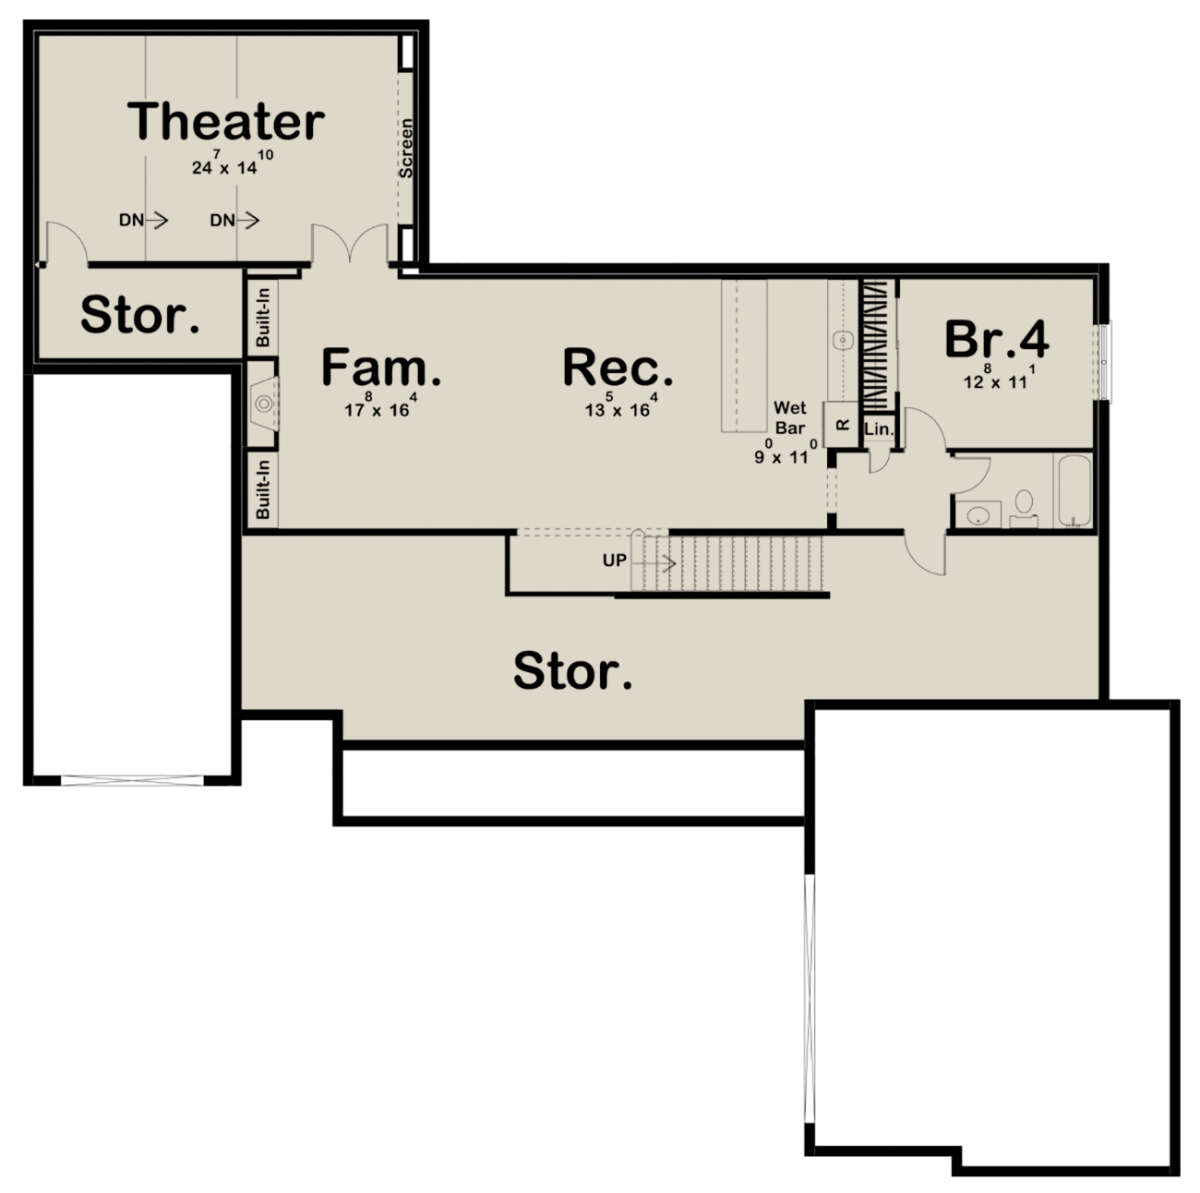 Modern Farmhouse Plan: 2,301 Square Feet, 3 Bedrooms, 2.5 Bathrooms ...